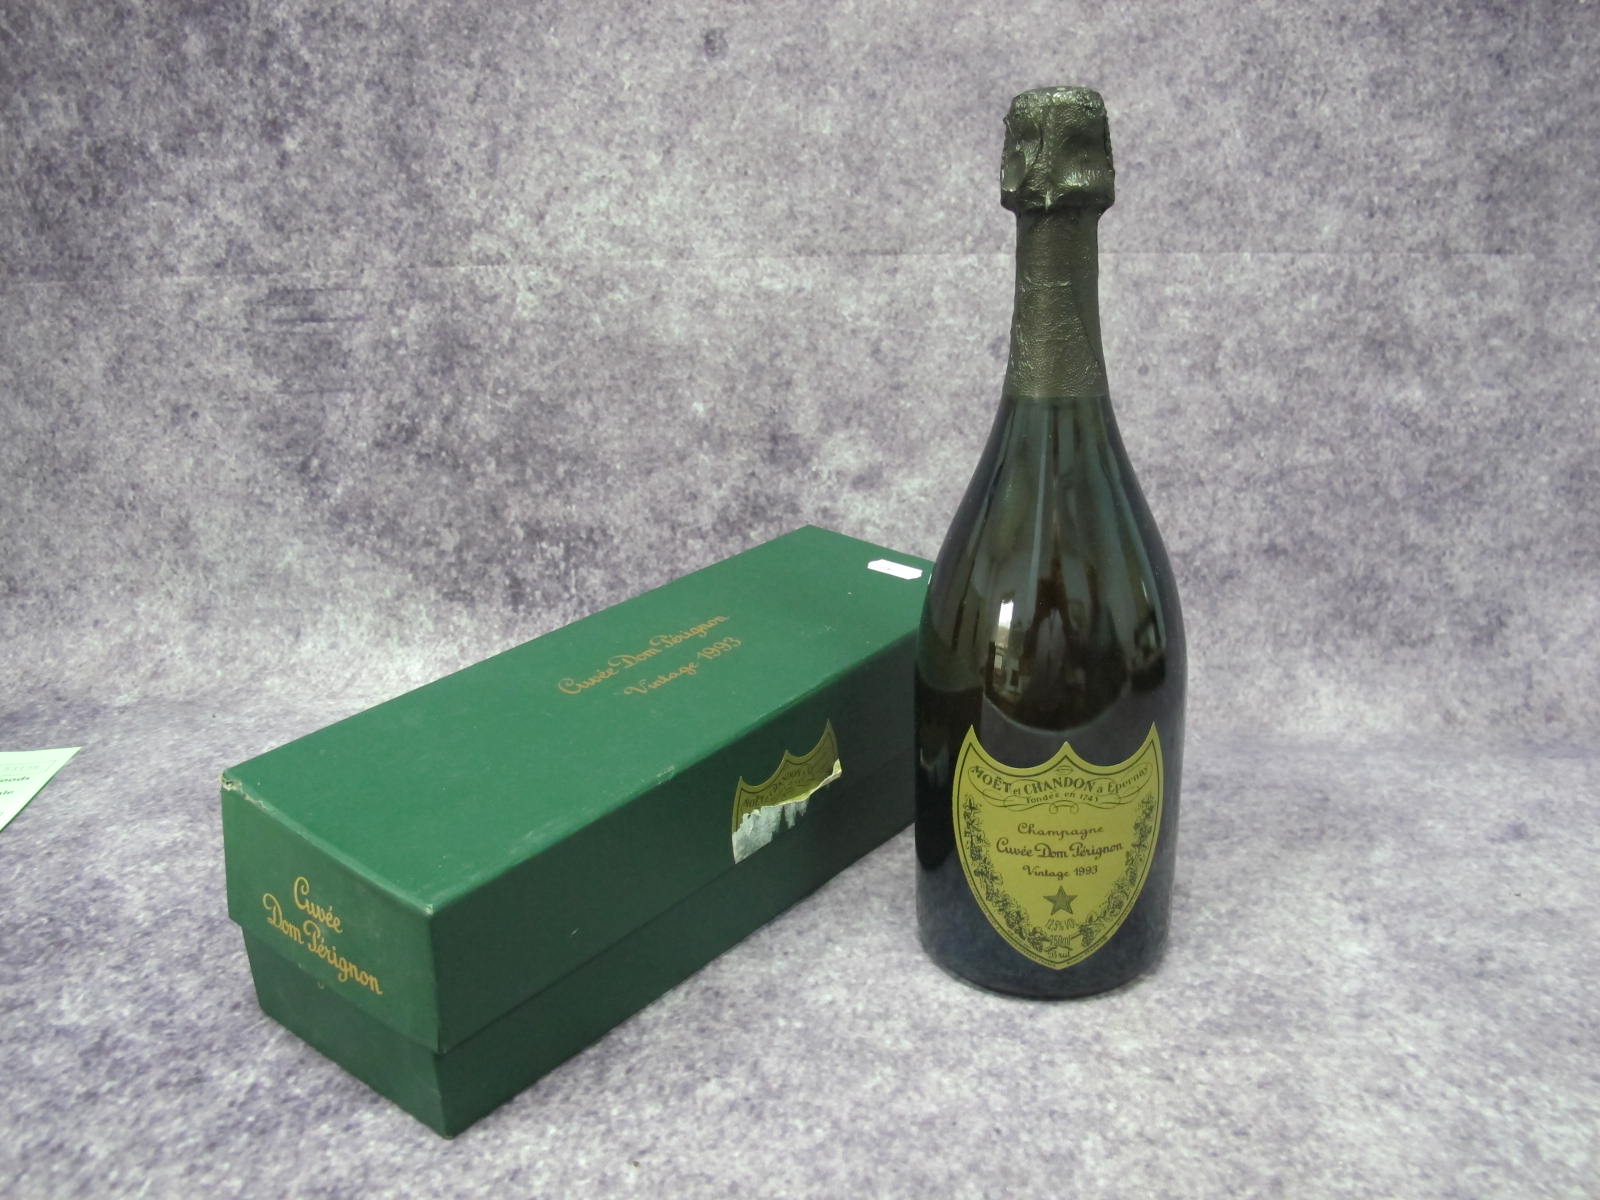 Champagne - Moet & Chandon Cuvee Dom Perignon Vintage Champagne 1993, 750ml, 12.5% Vol. (partially